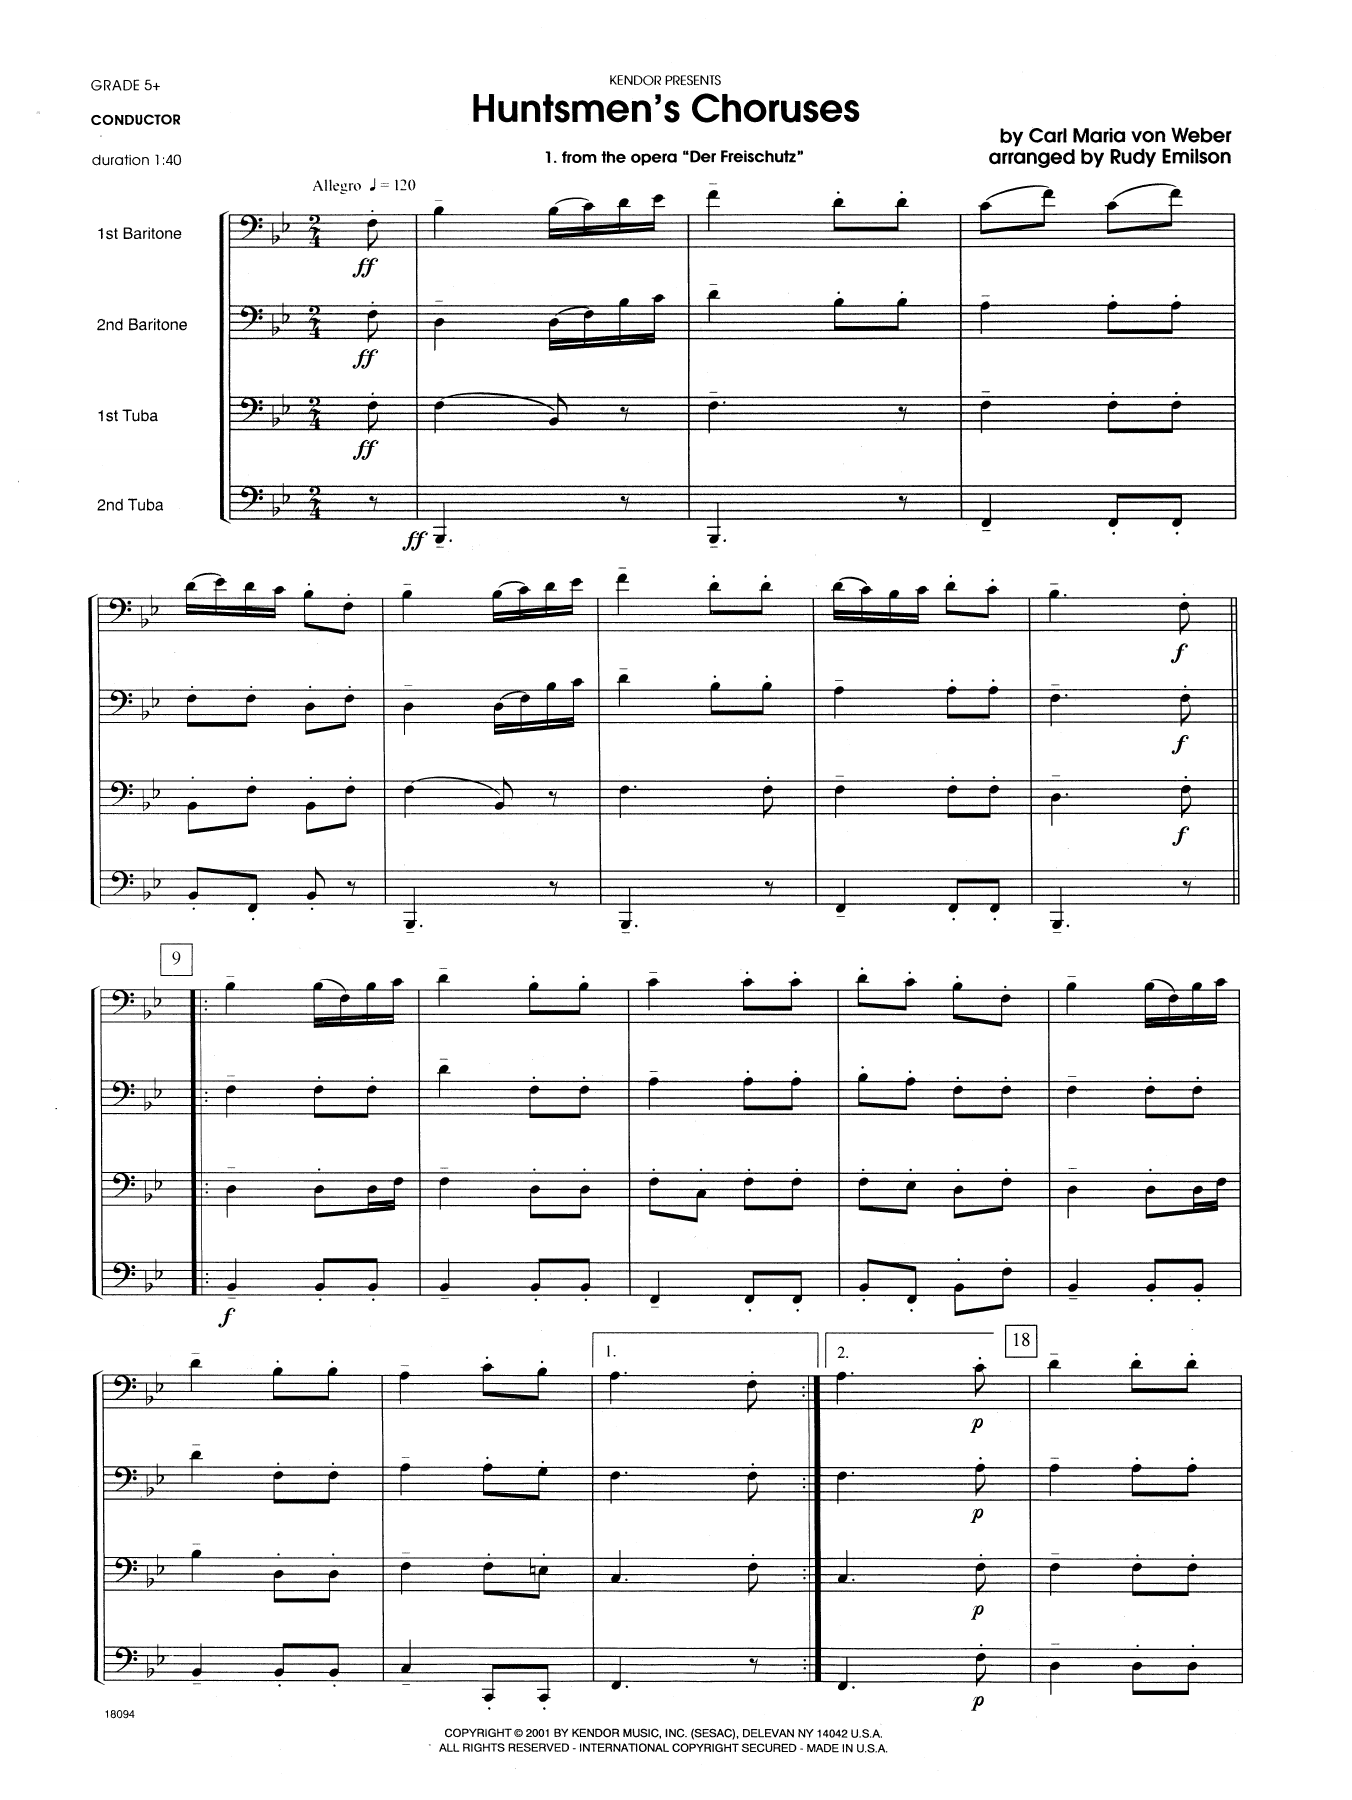 Download Rudy Emilson Huntsmen's Choruses - Full Score Sheet Music